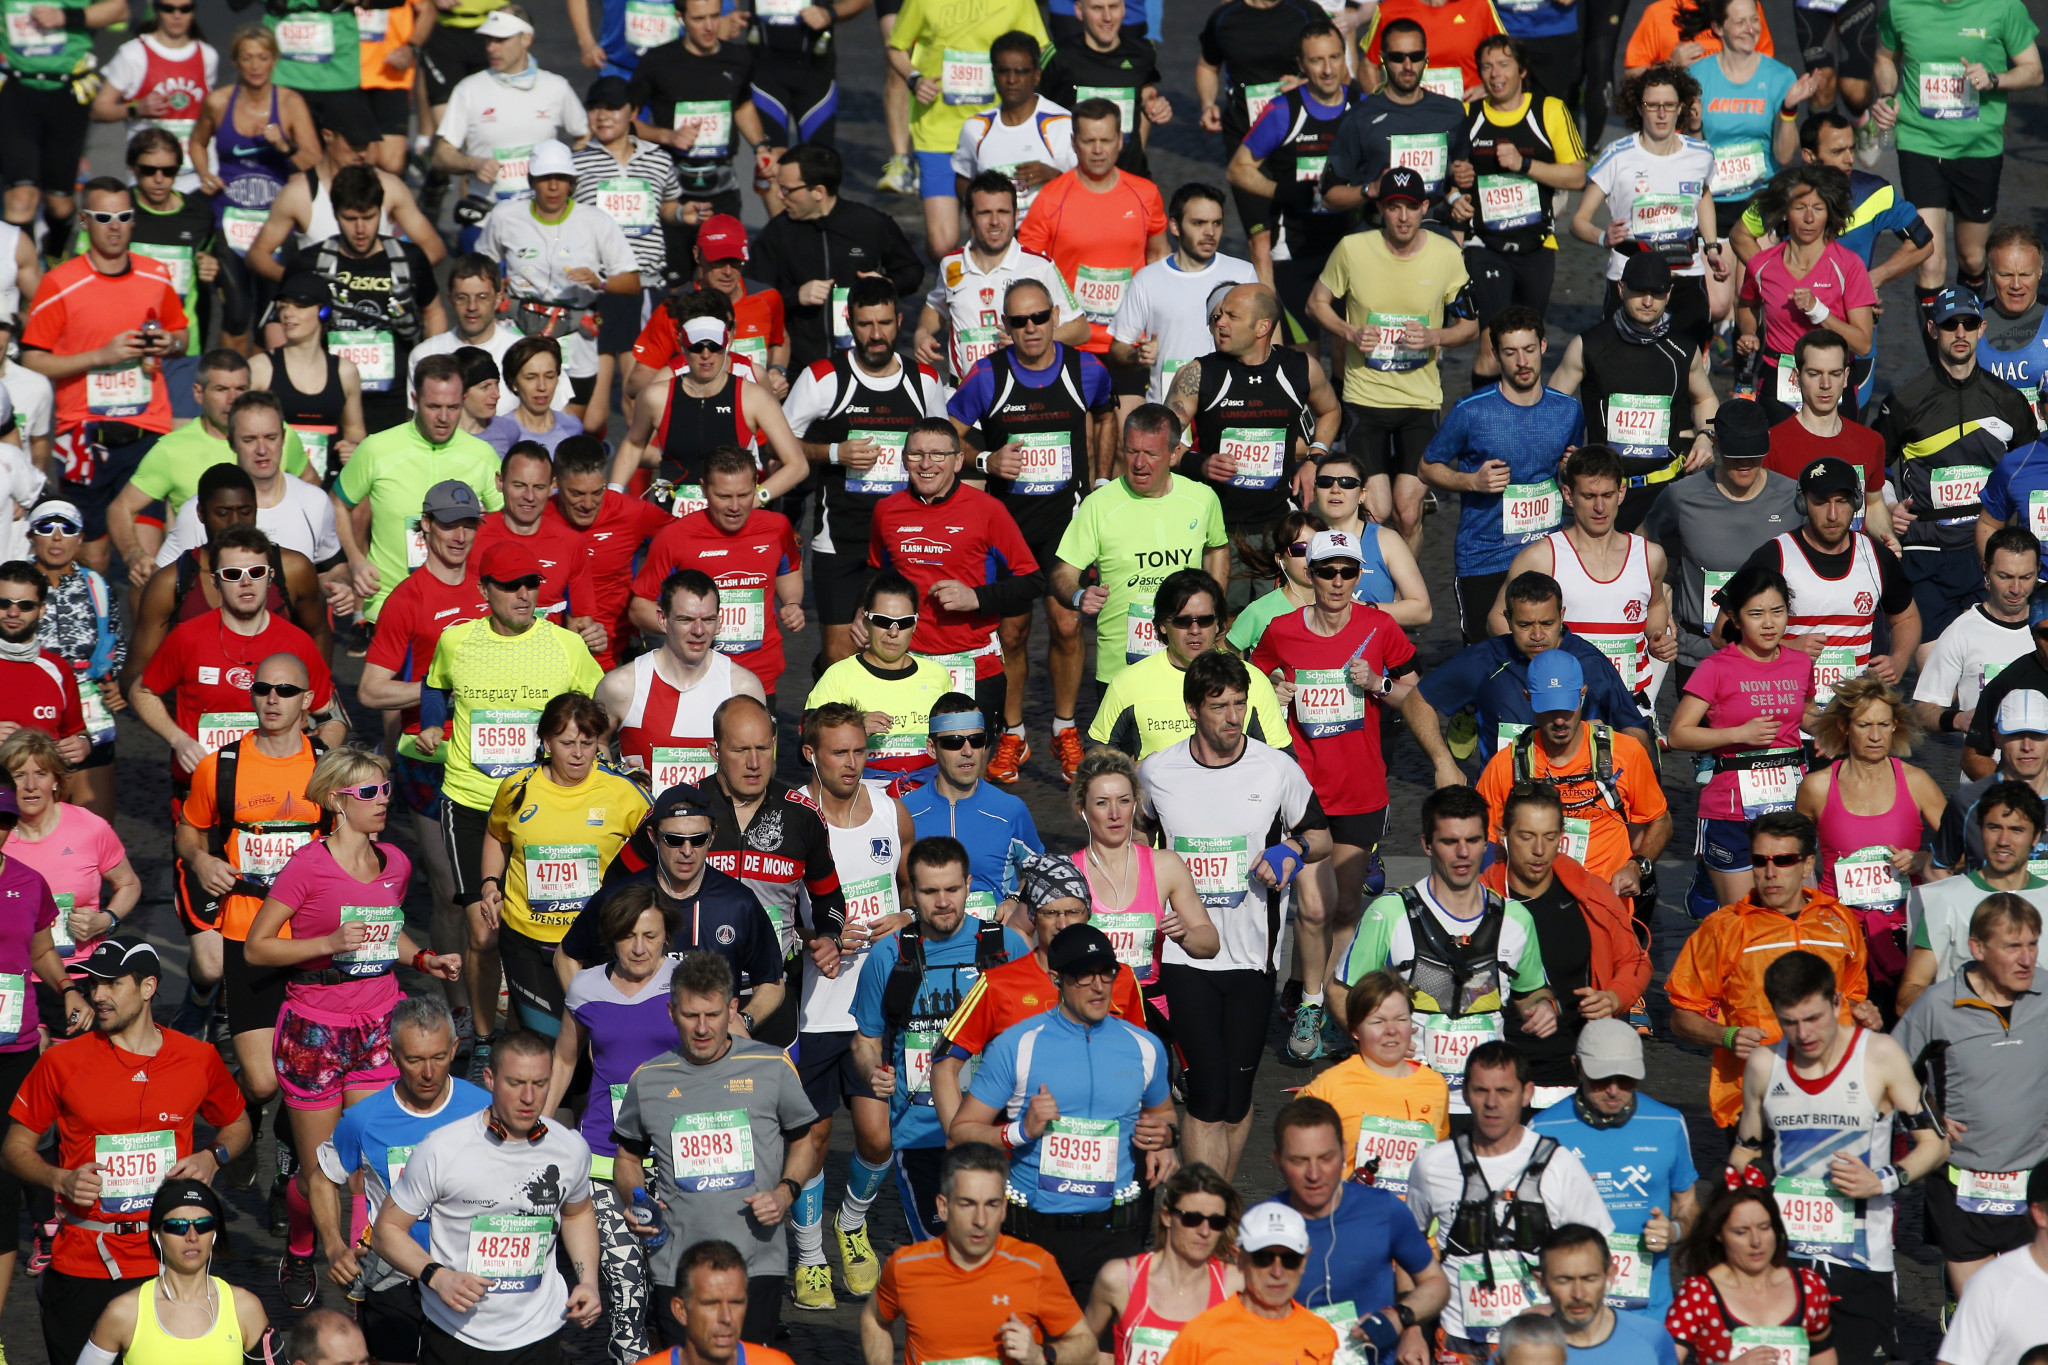 Paris Half Marathon aiming to reschedule event after coronavirus restrictions